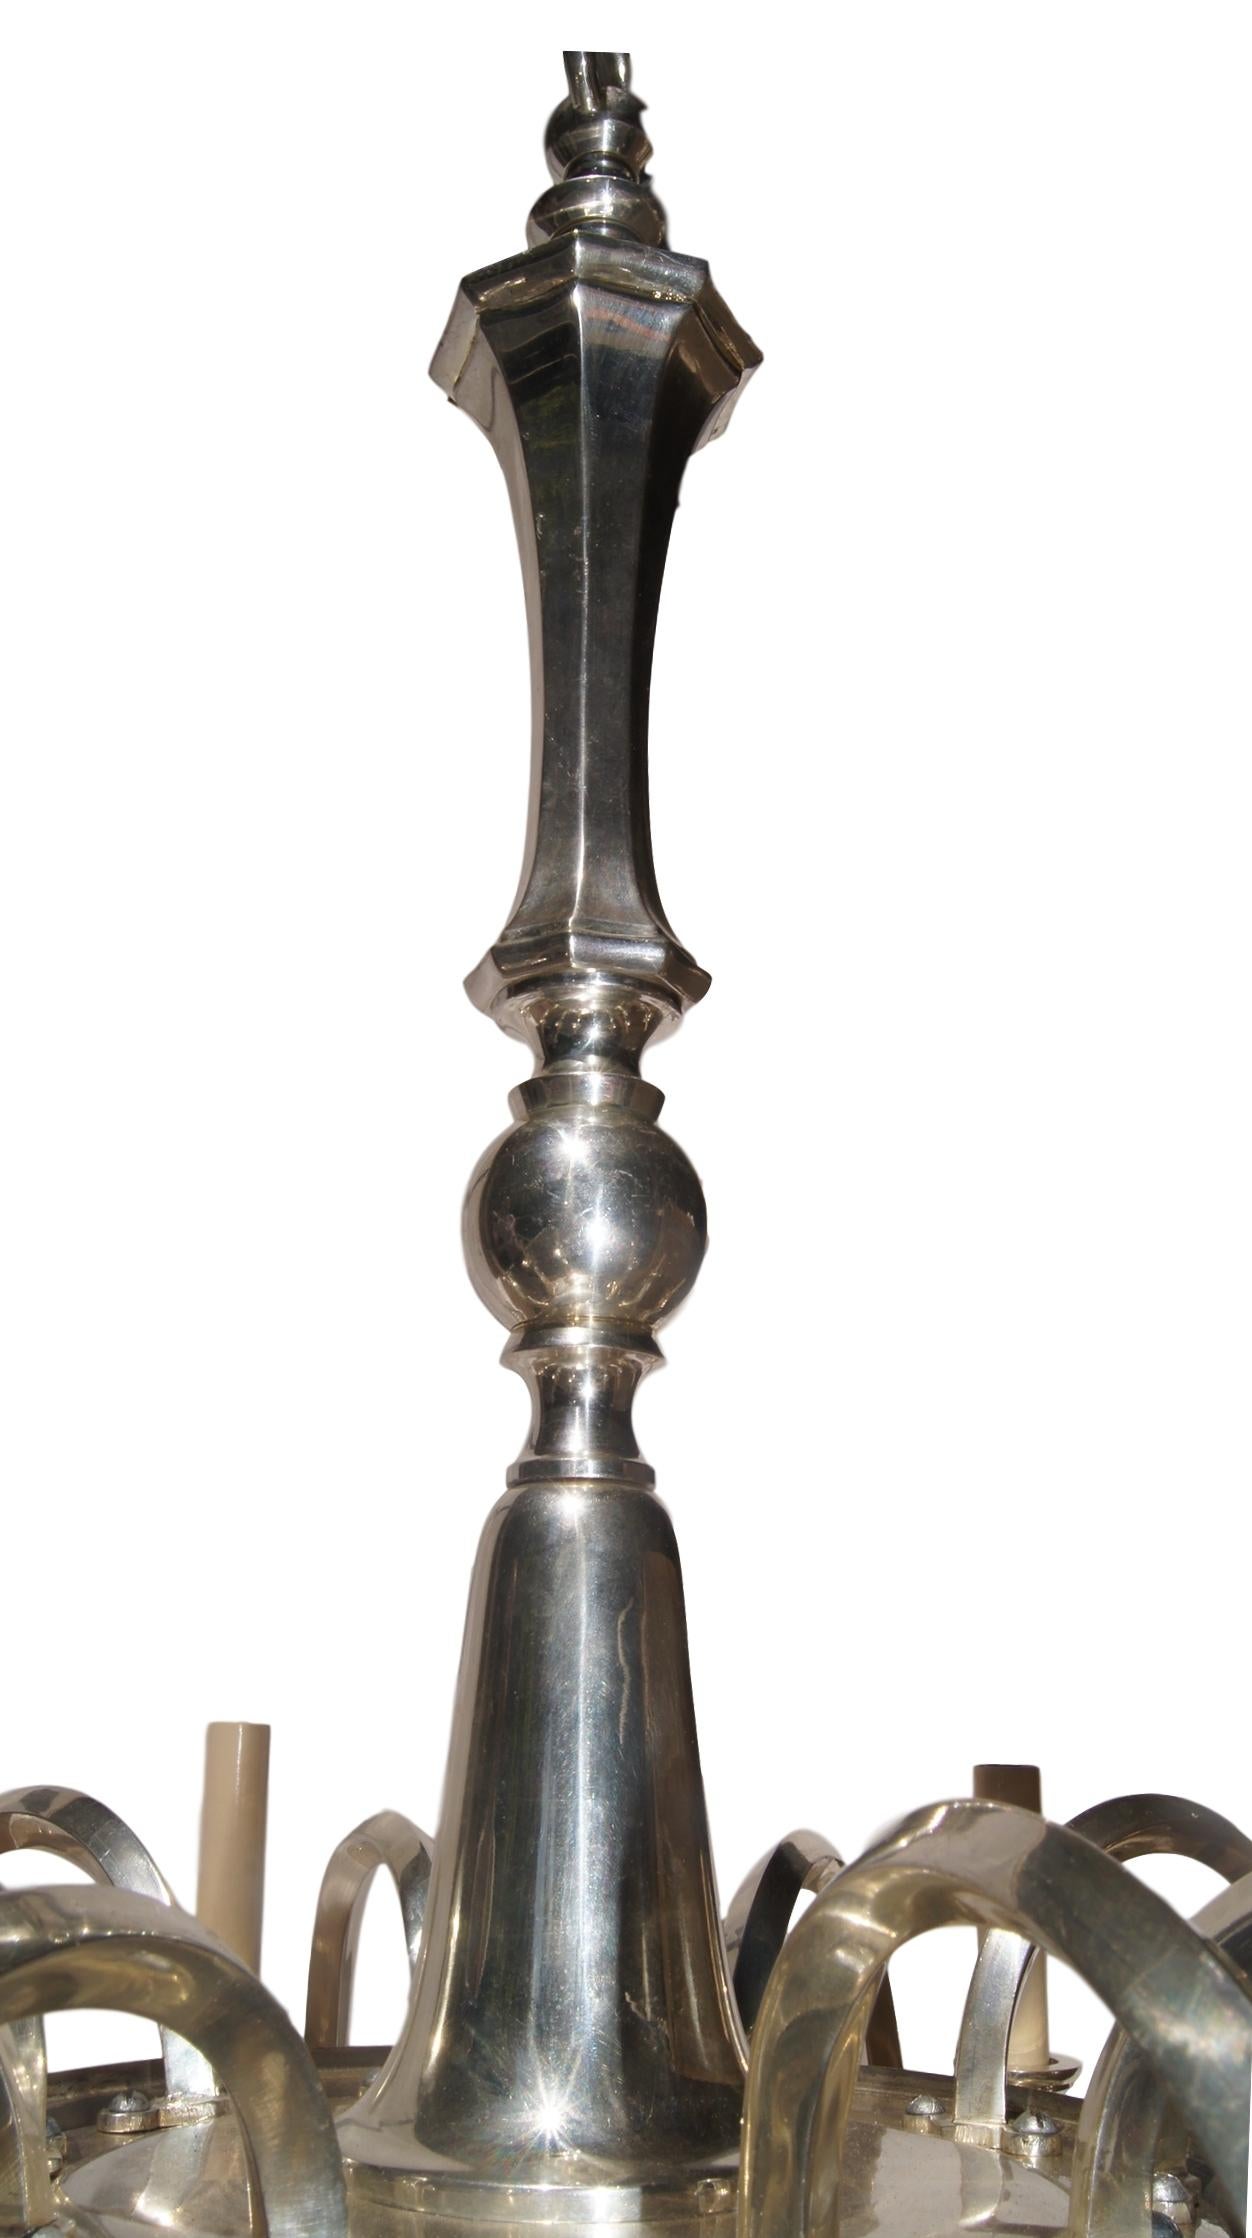 A circa 1920s English silver plated ten-arm chandelier.

Measurements:
Minimum drop: 28